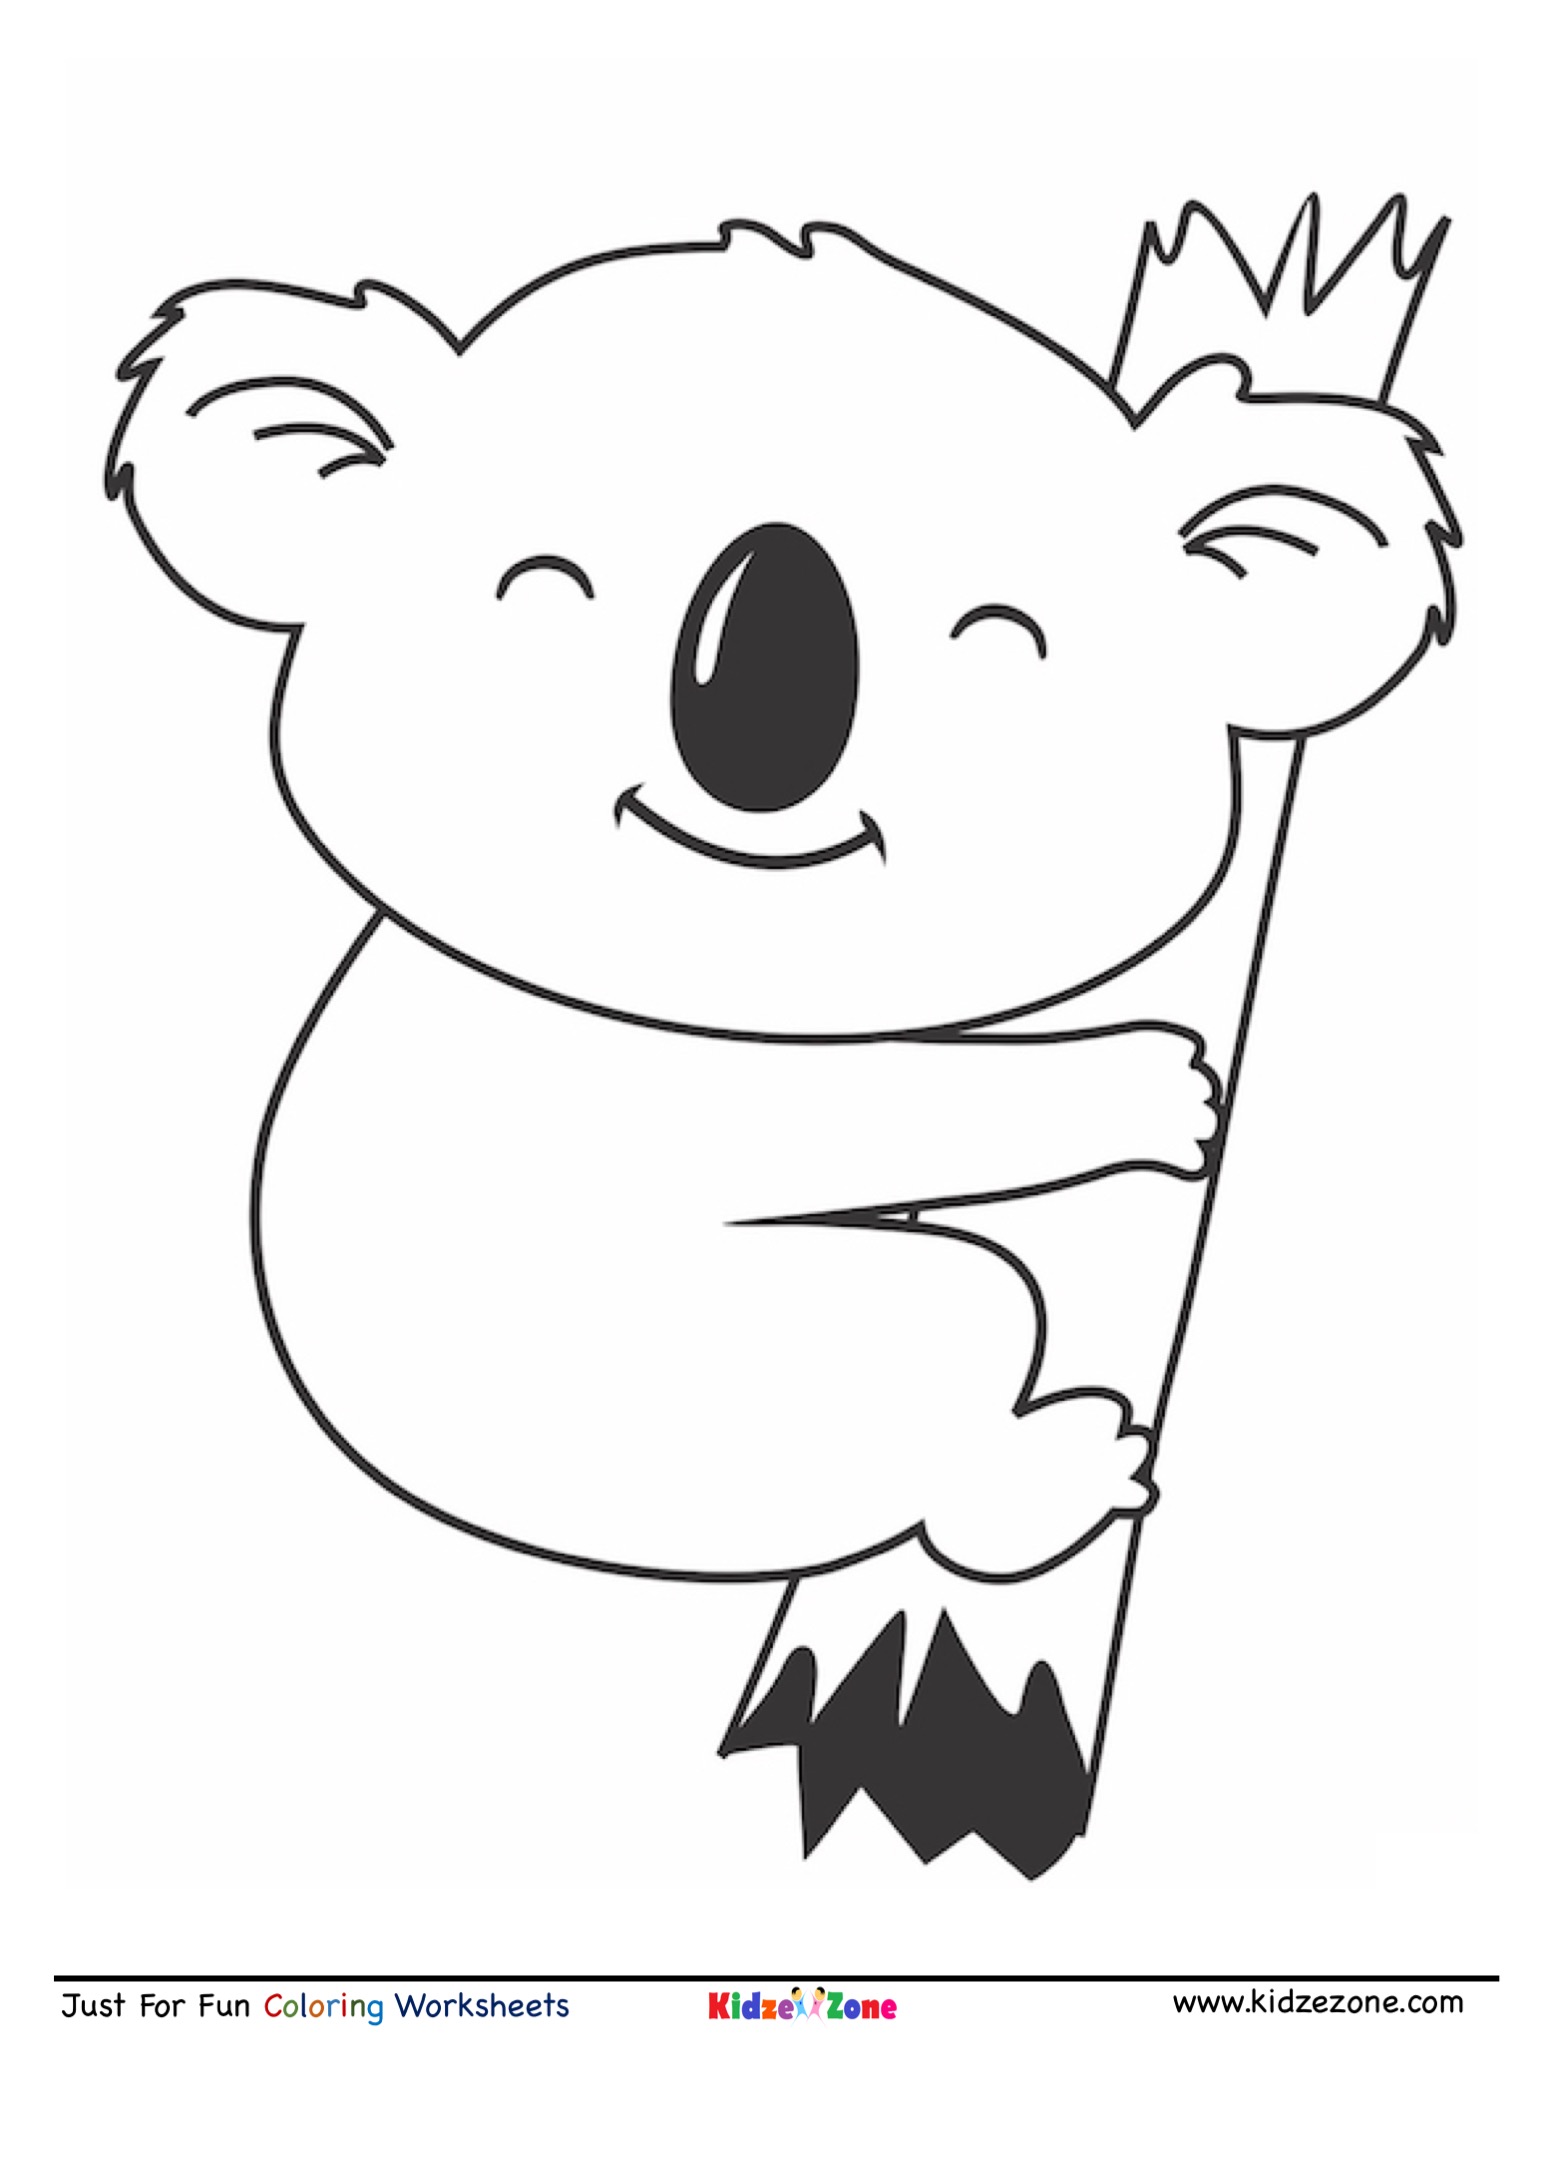 Koala cartoon coloring page